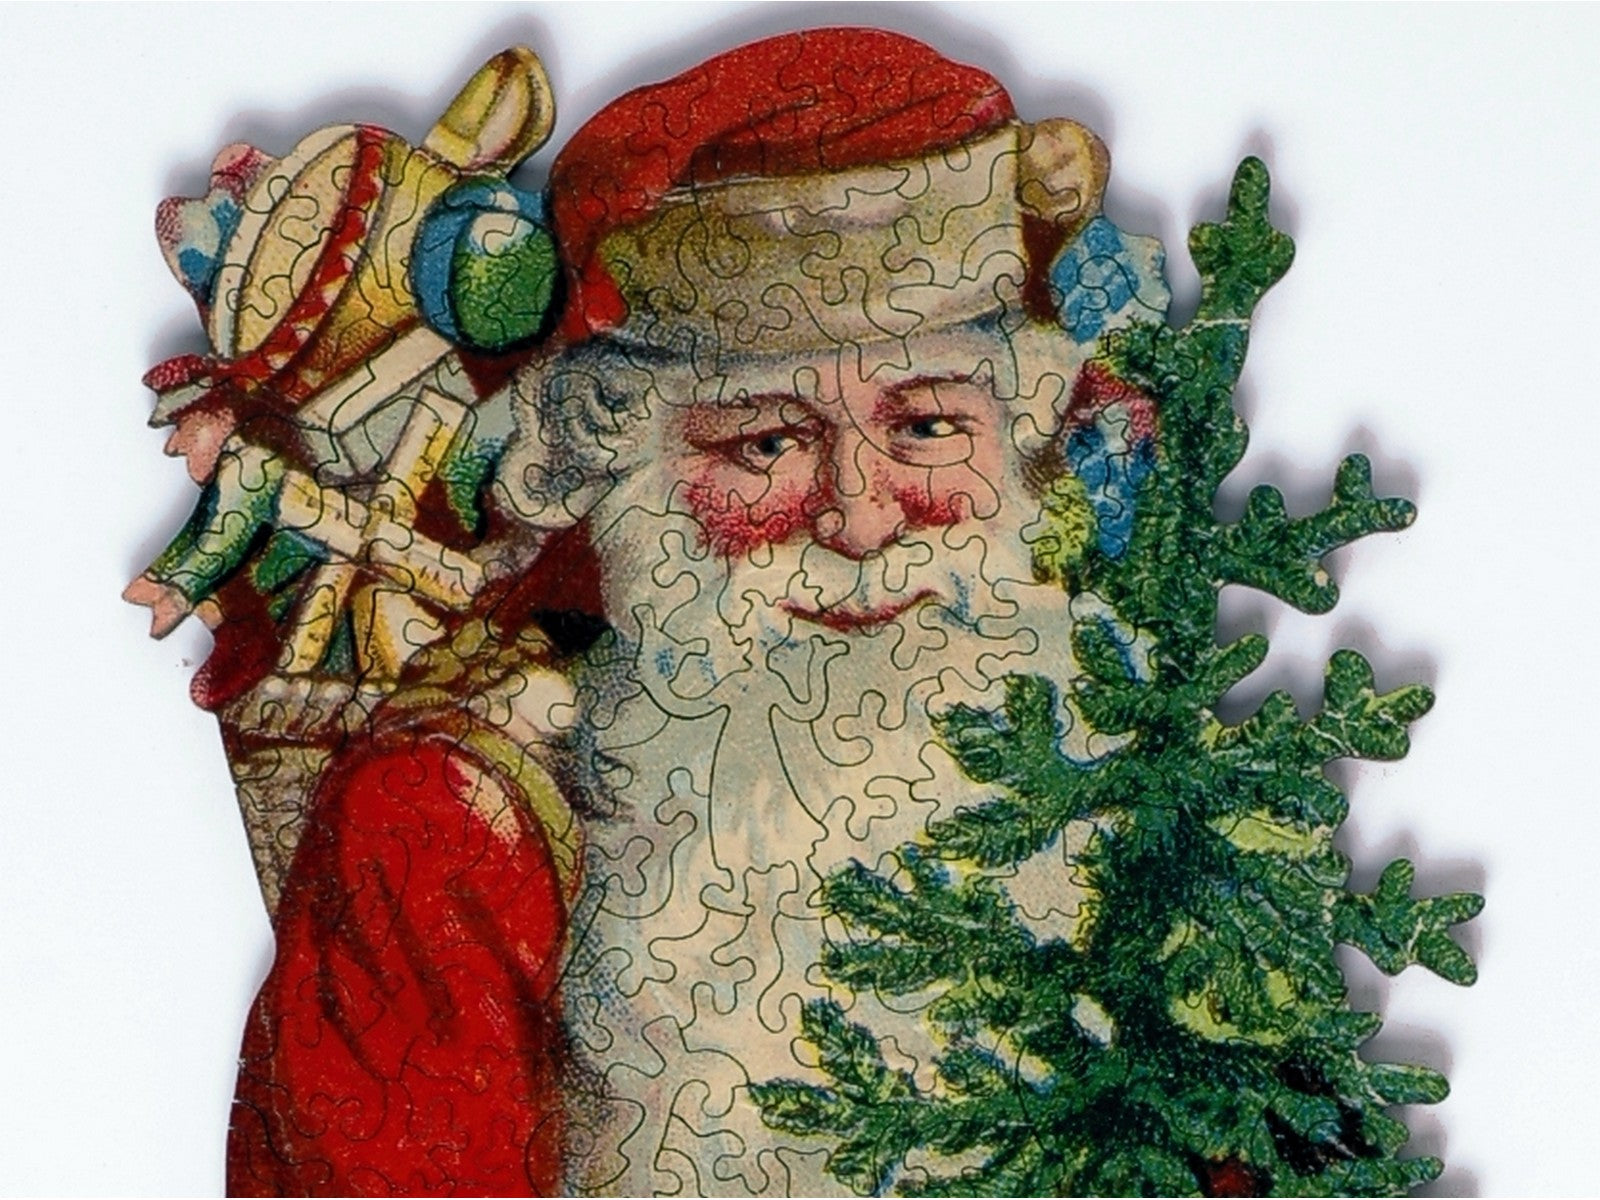 A closeup of the front of the puzzle, Saint Nicholas.